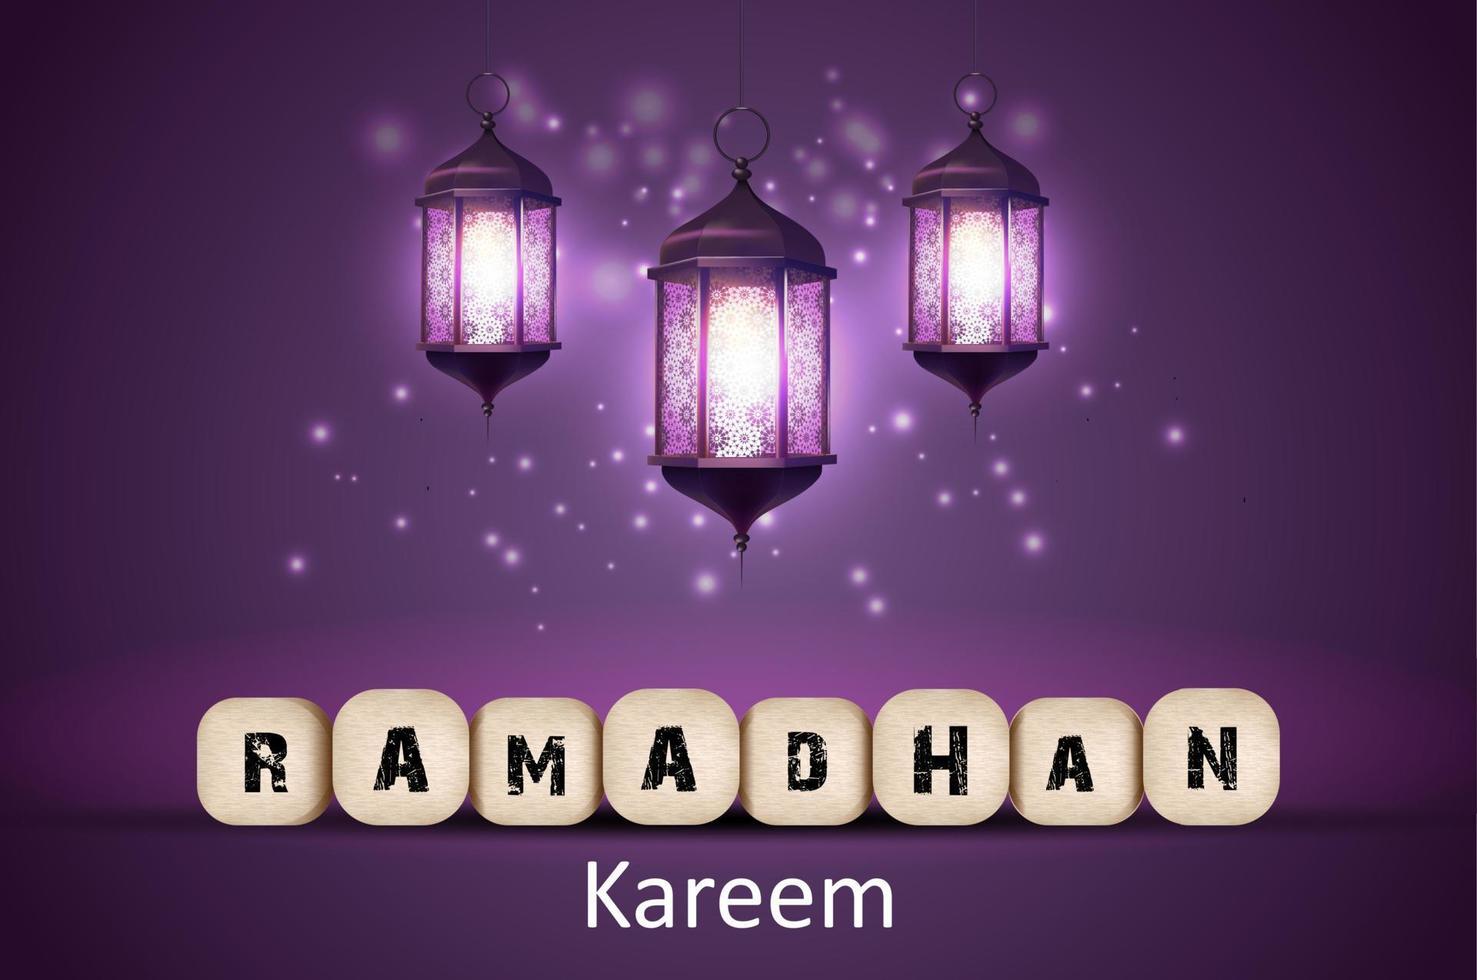 Ramadan Kareem greetings with lanterns in a glowing background vector